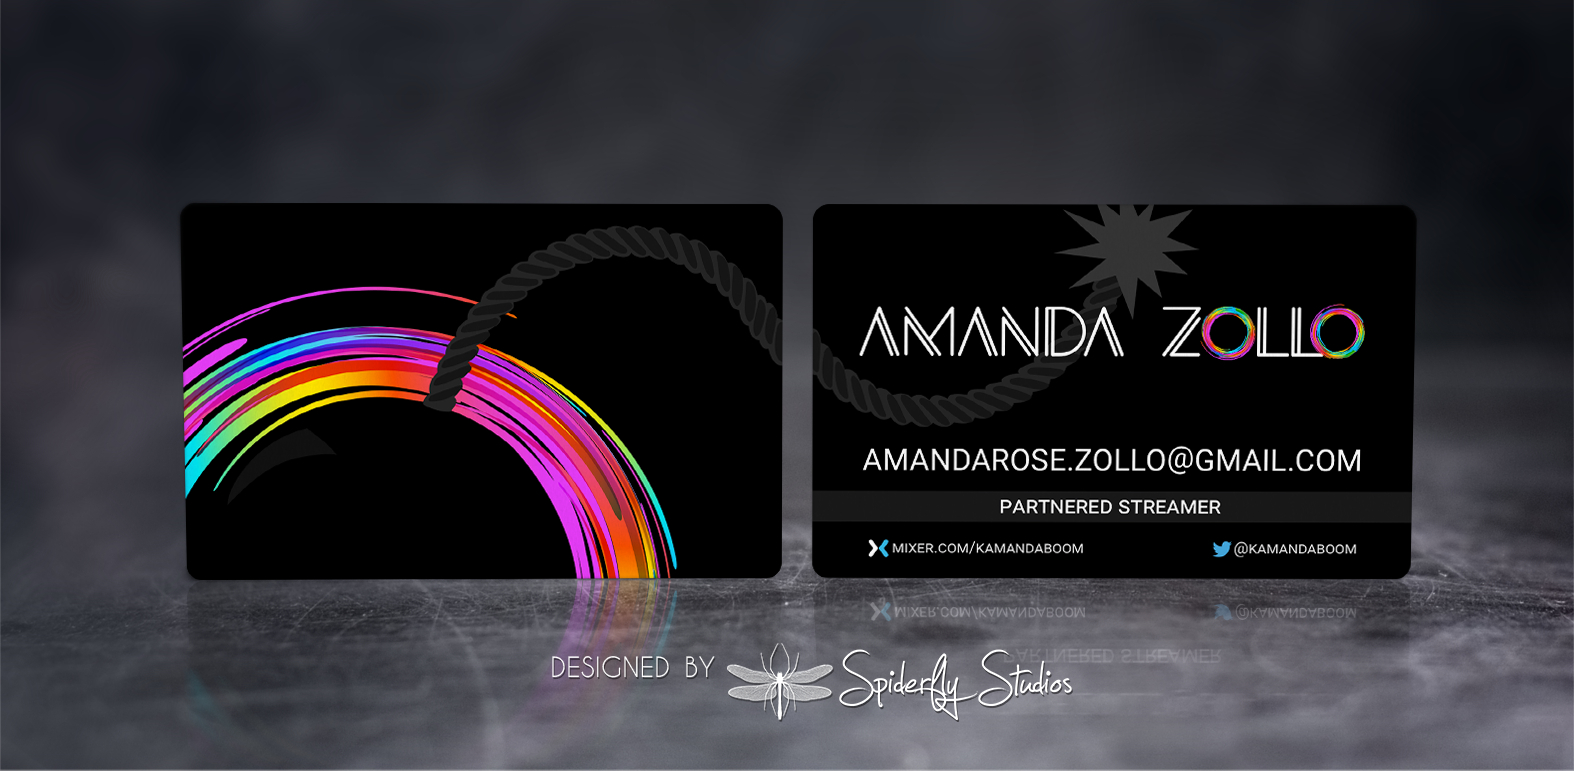 Amanda Zollo - Business Cards